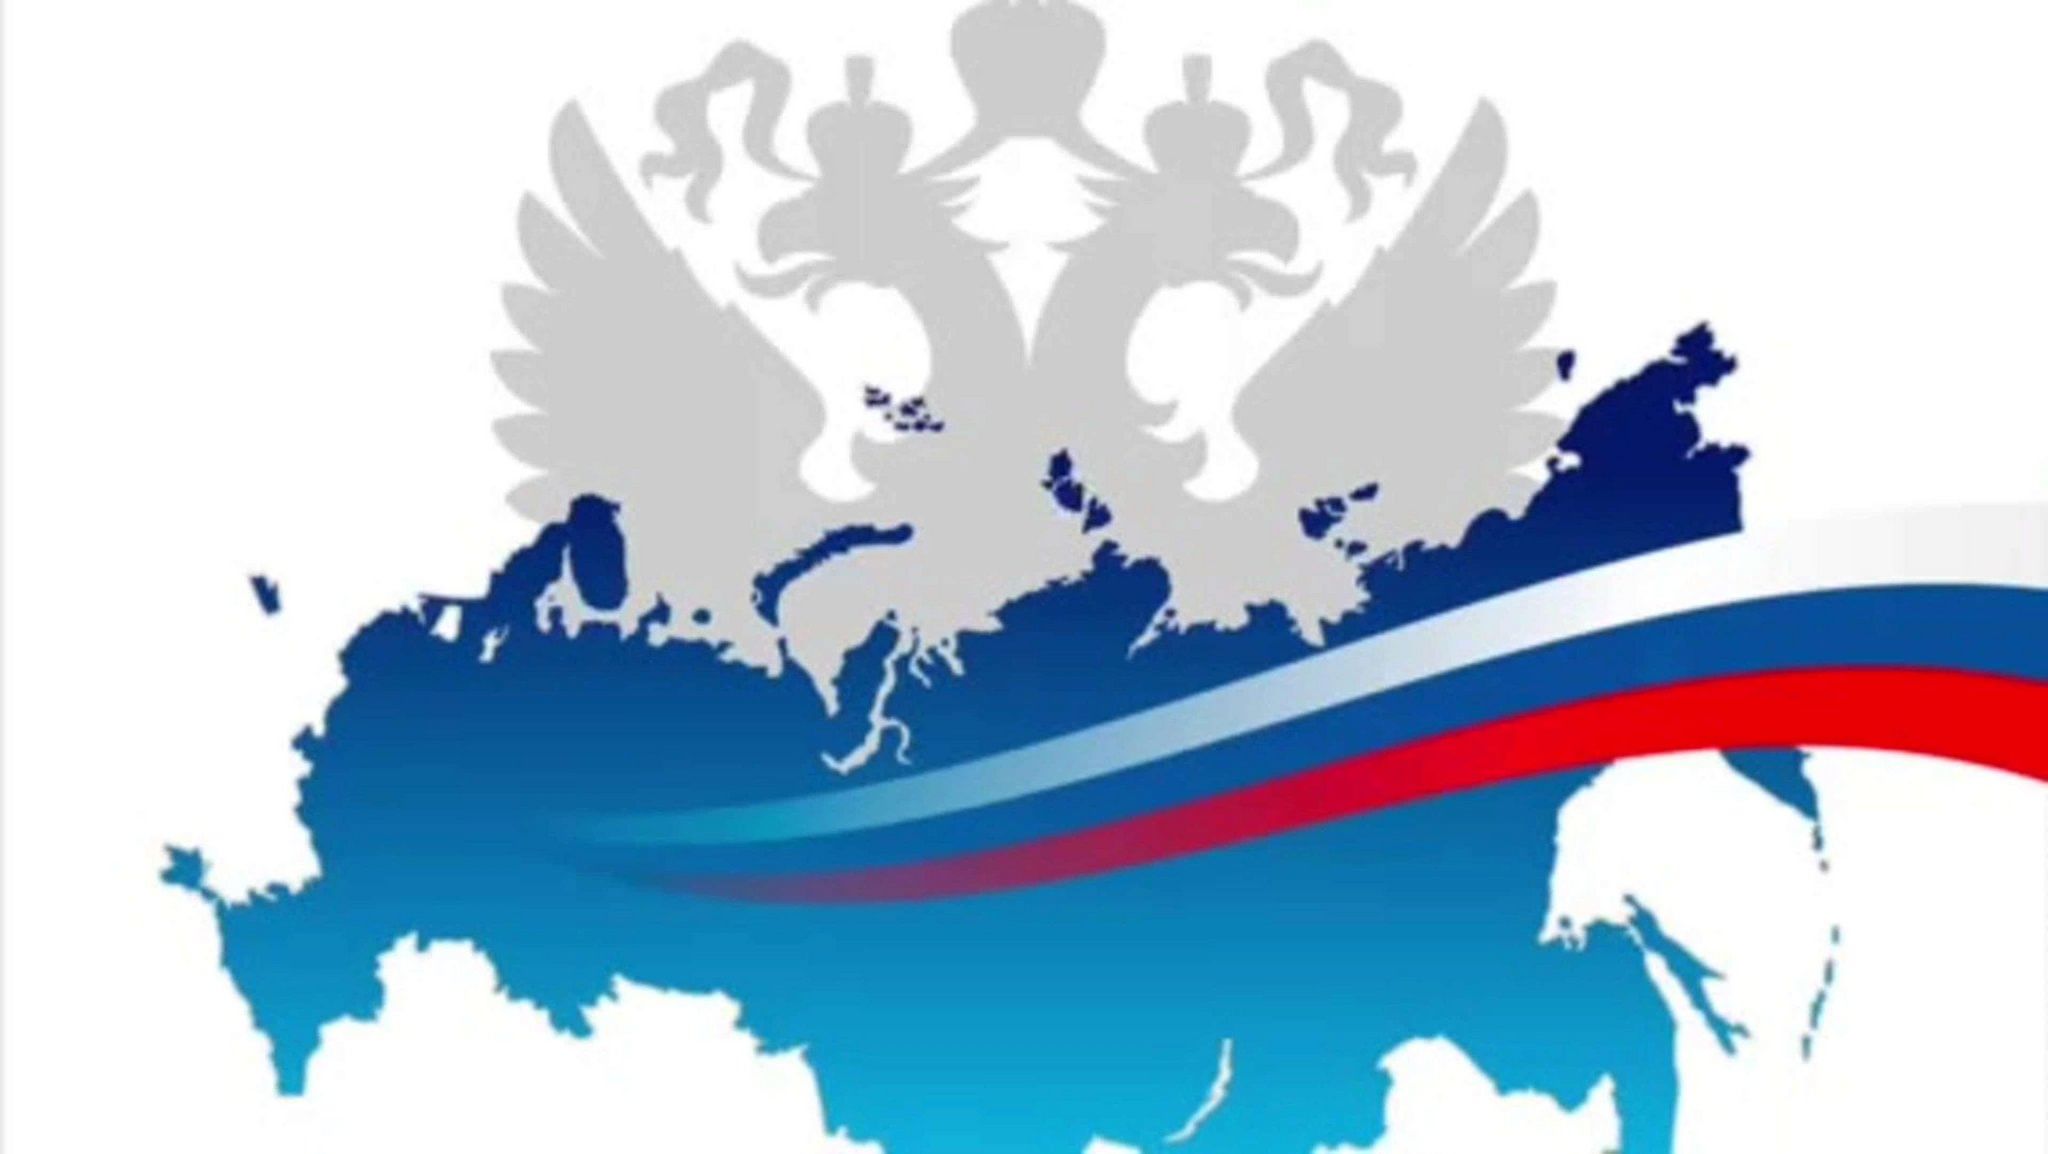 Флаг России На Фон